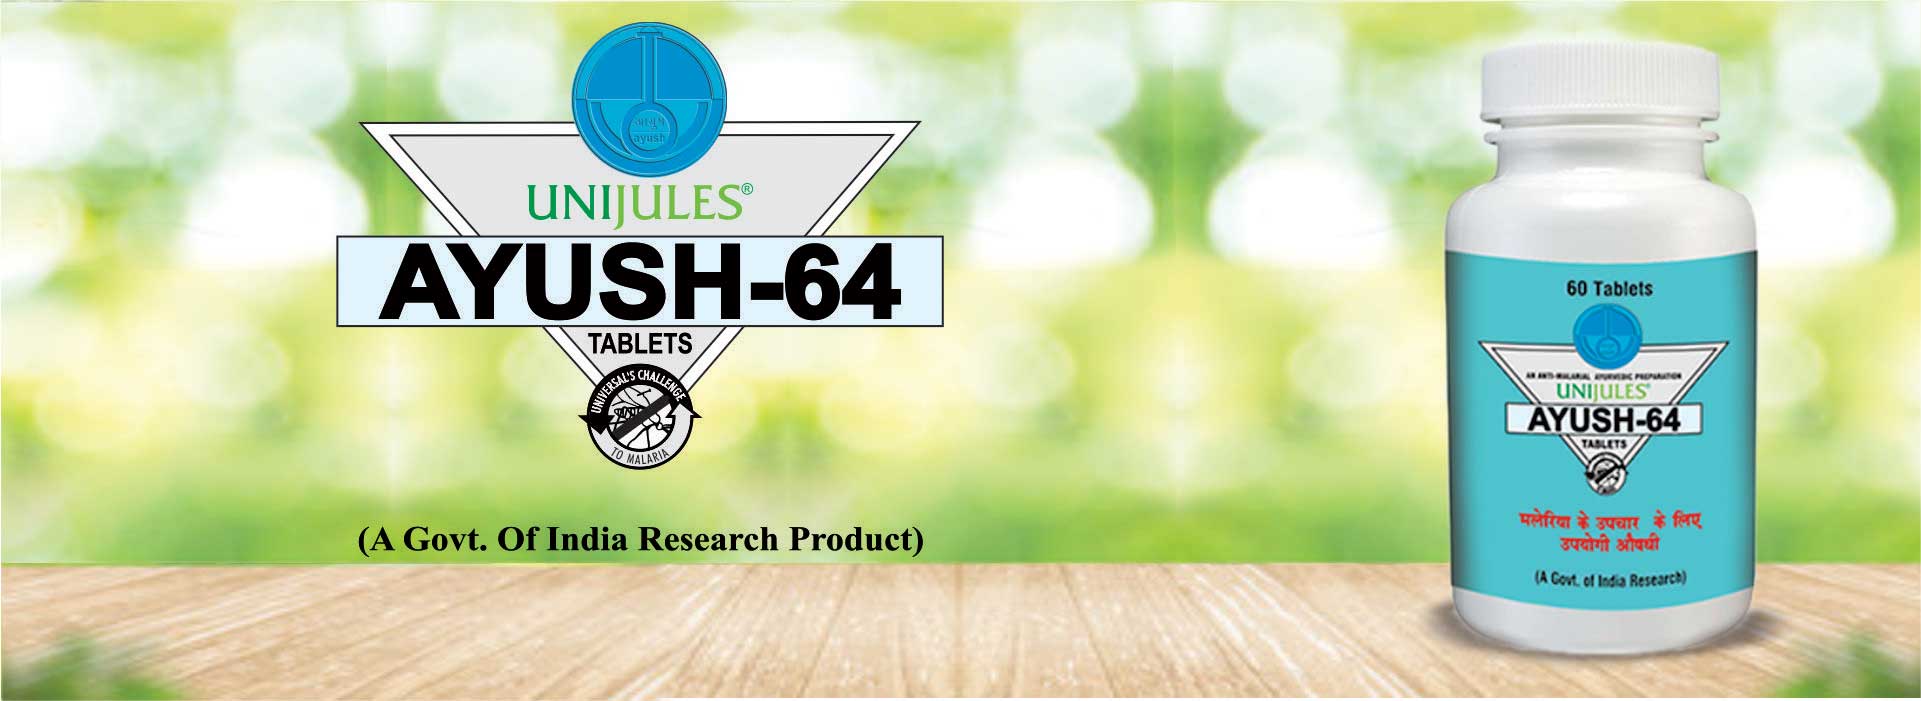 Ayush-64 Tablets